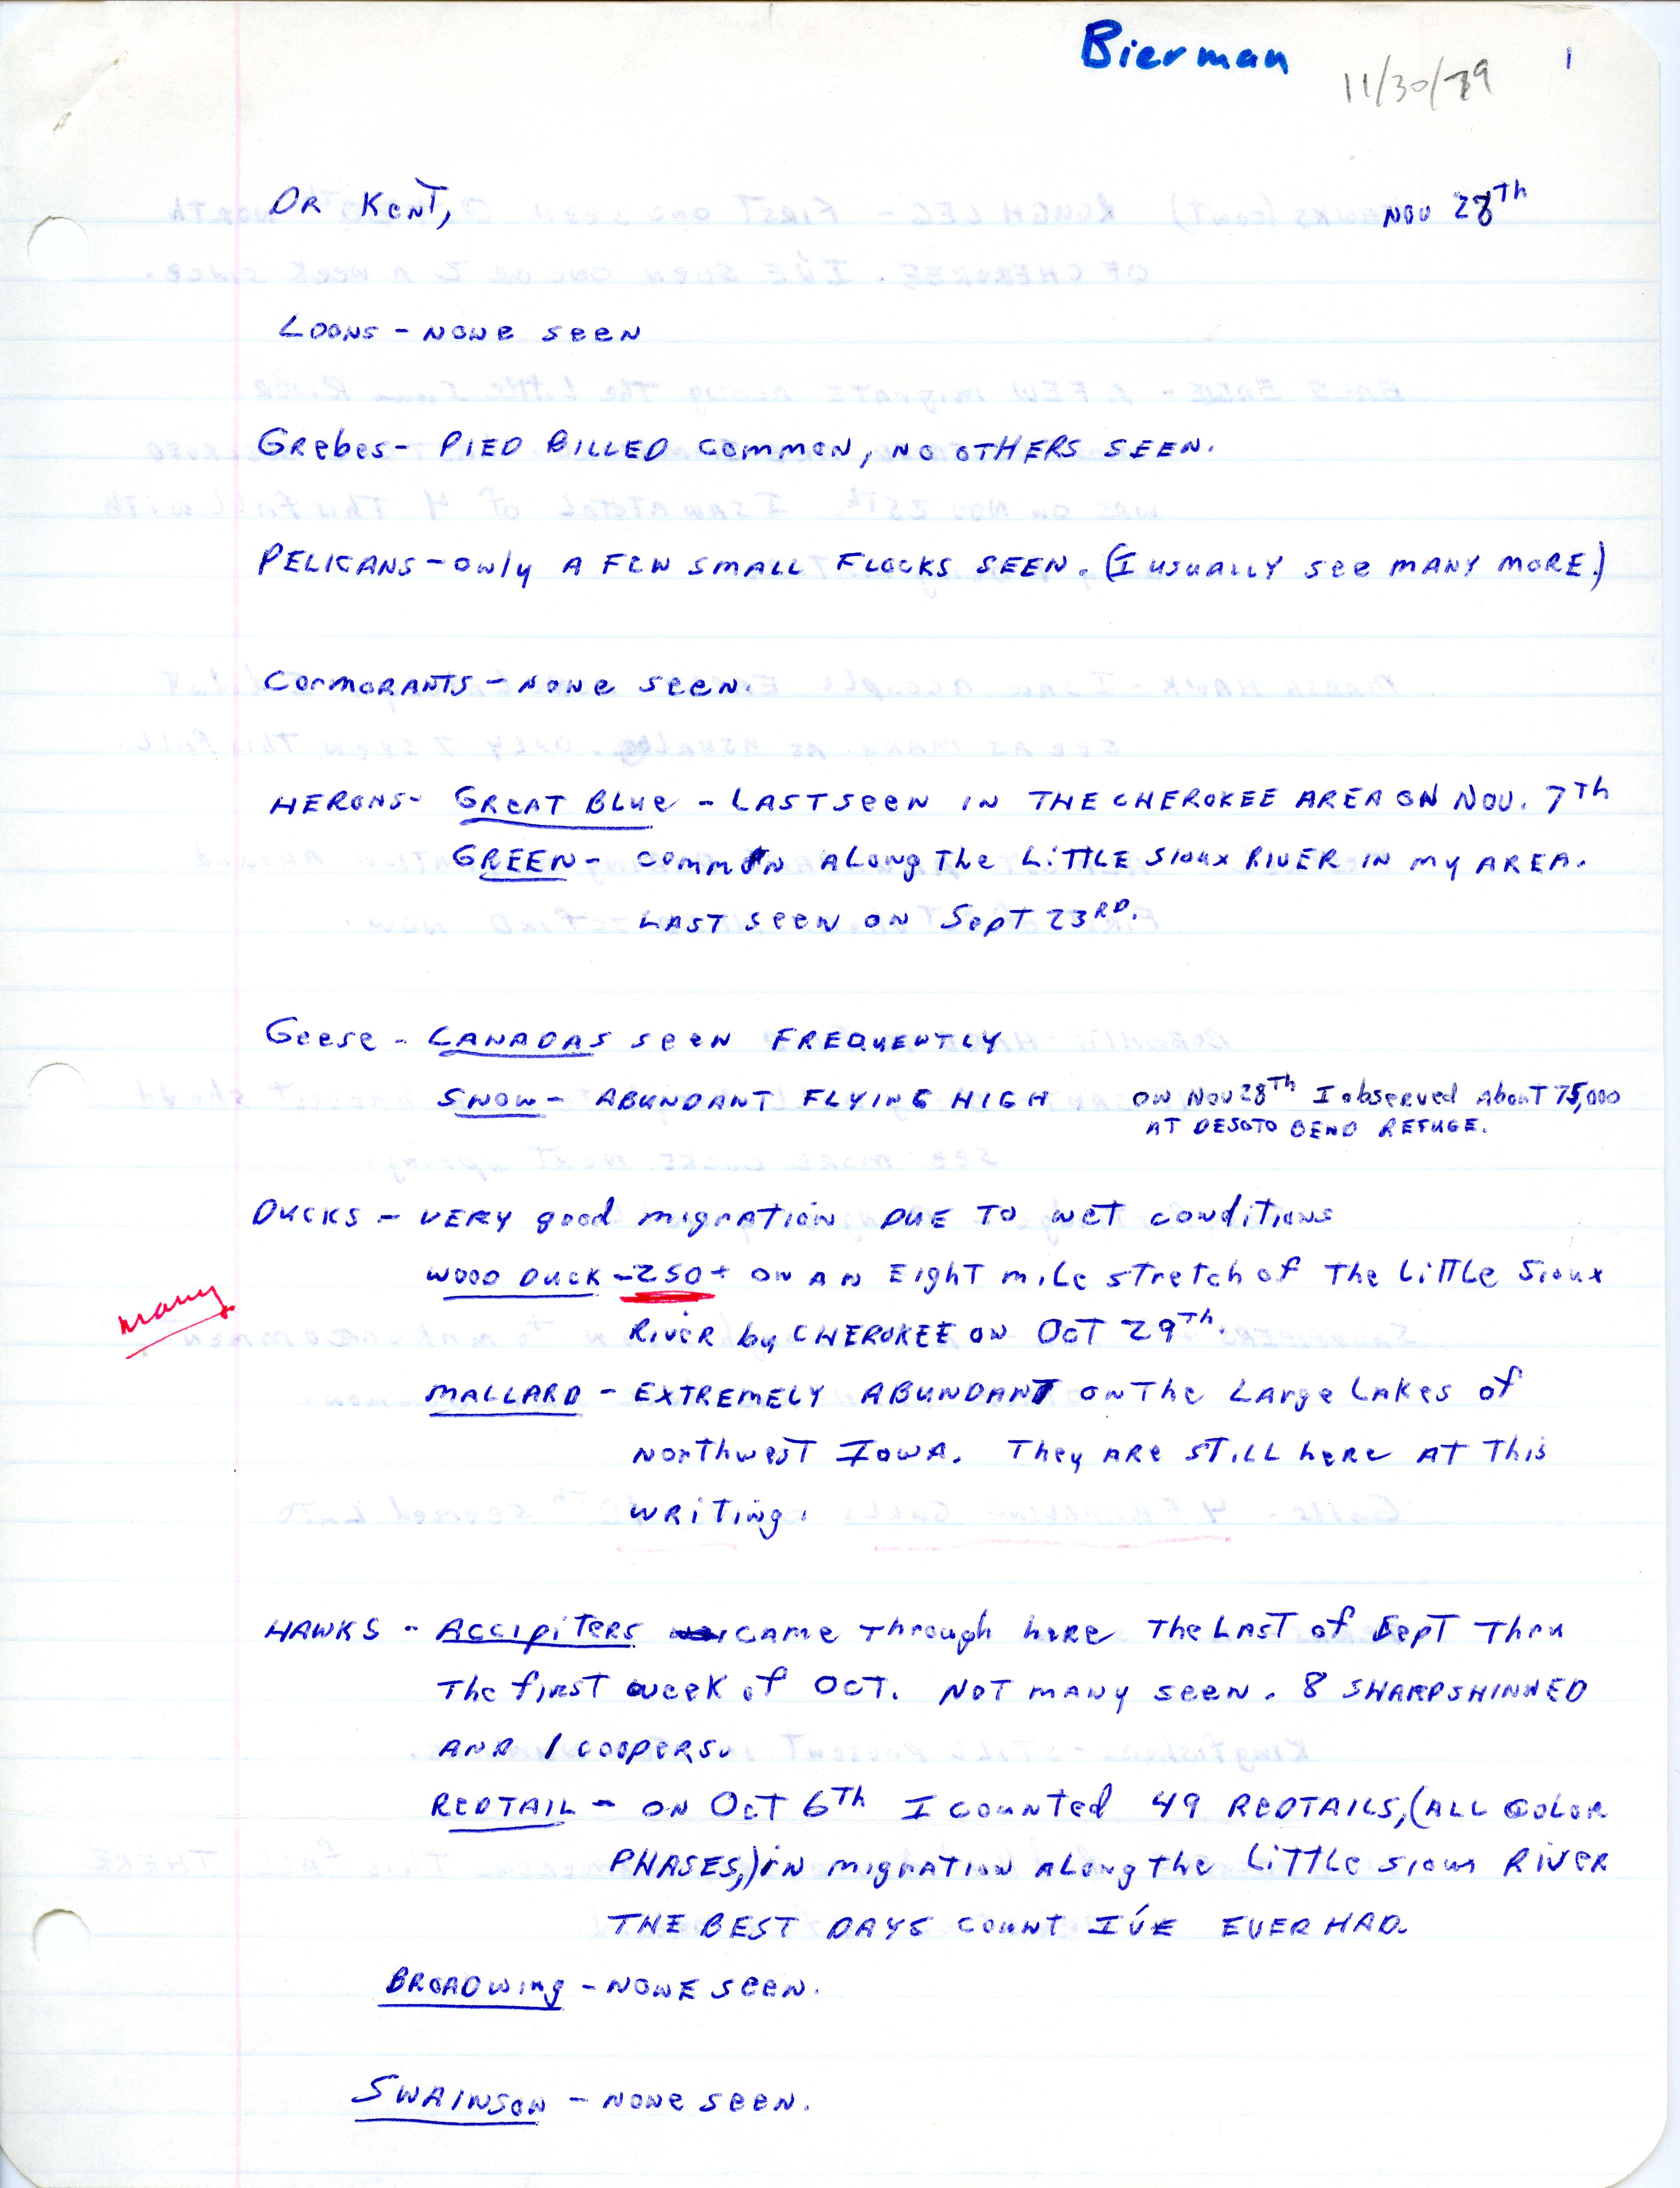 Dick Bierman letter to Thomas H. Kent regarding bird sightings, November 28, 1979